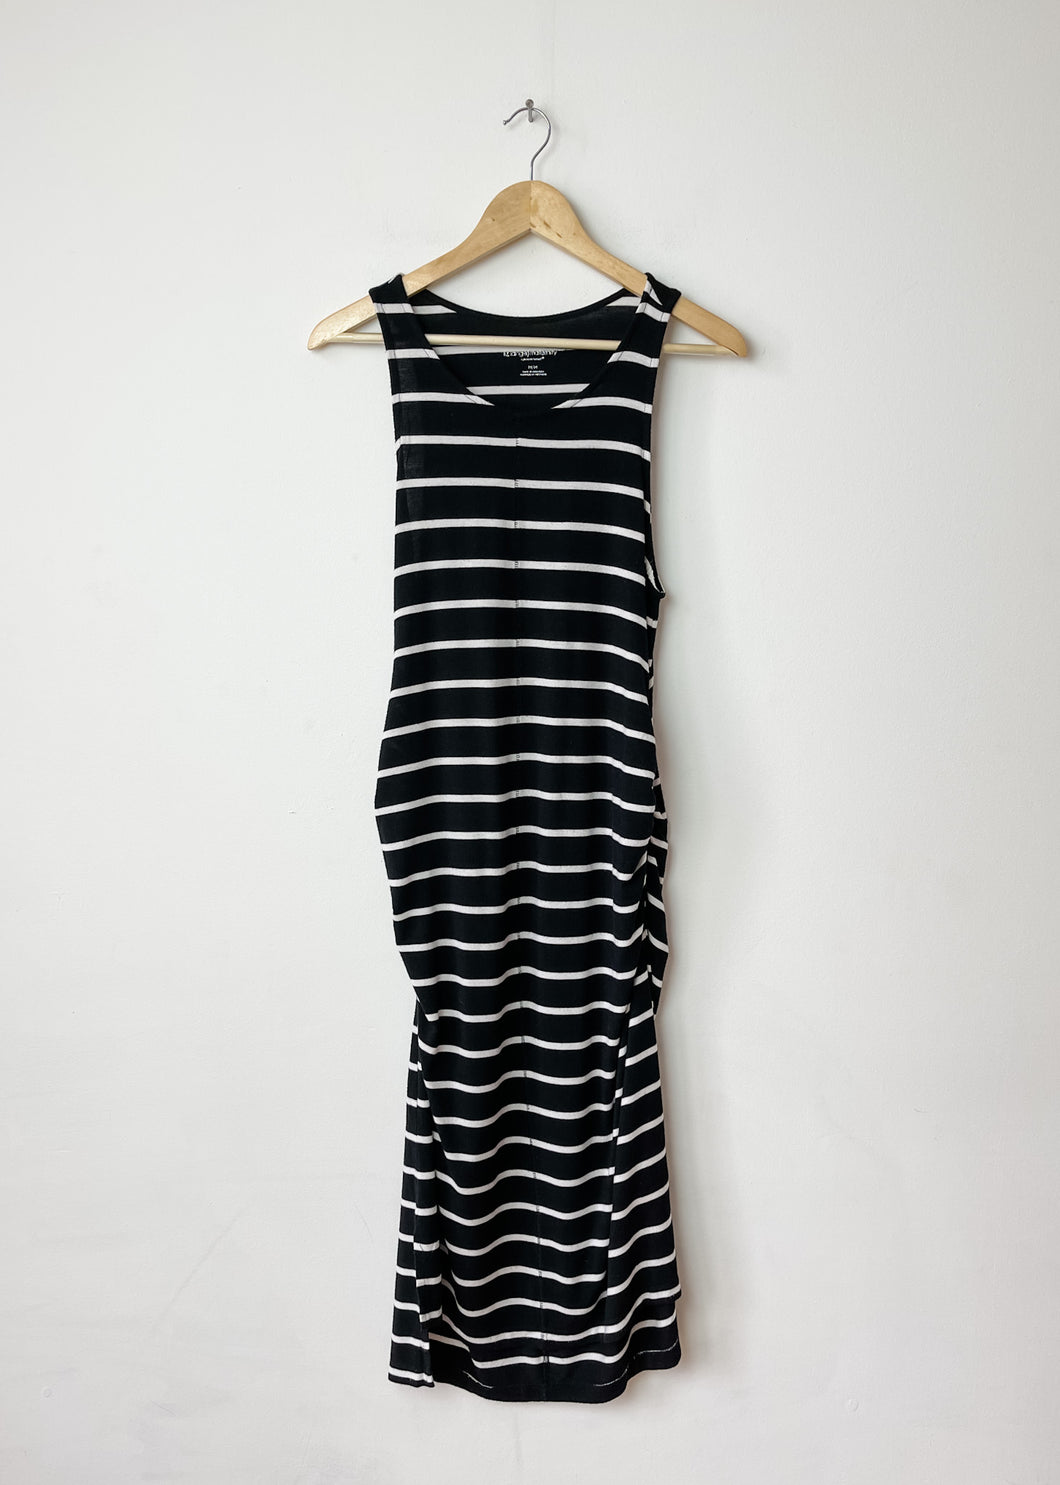 Maternity Striped Liz Lange Dress Size Medium